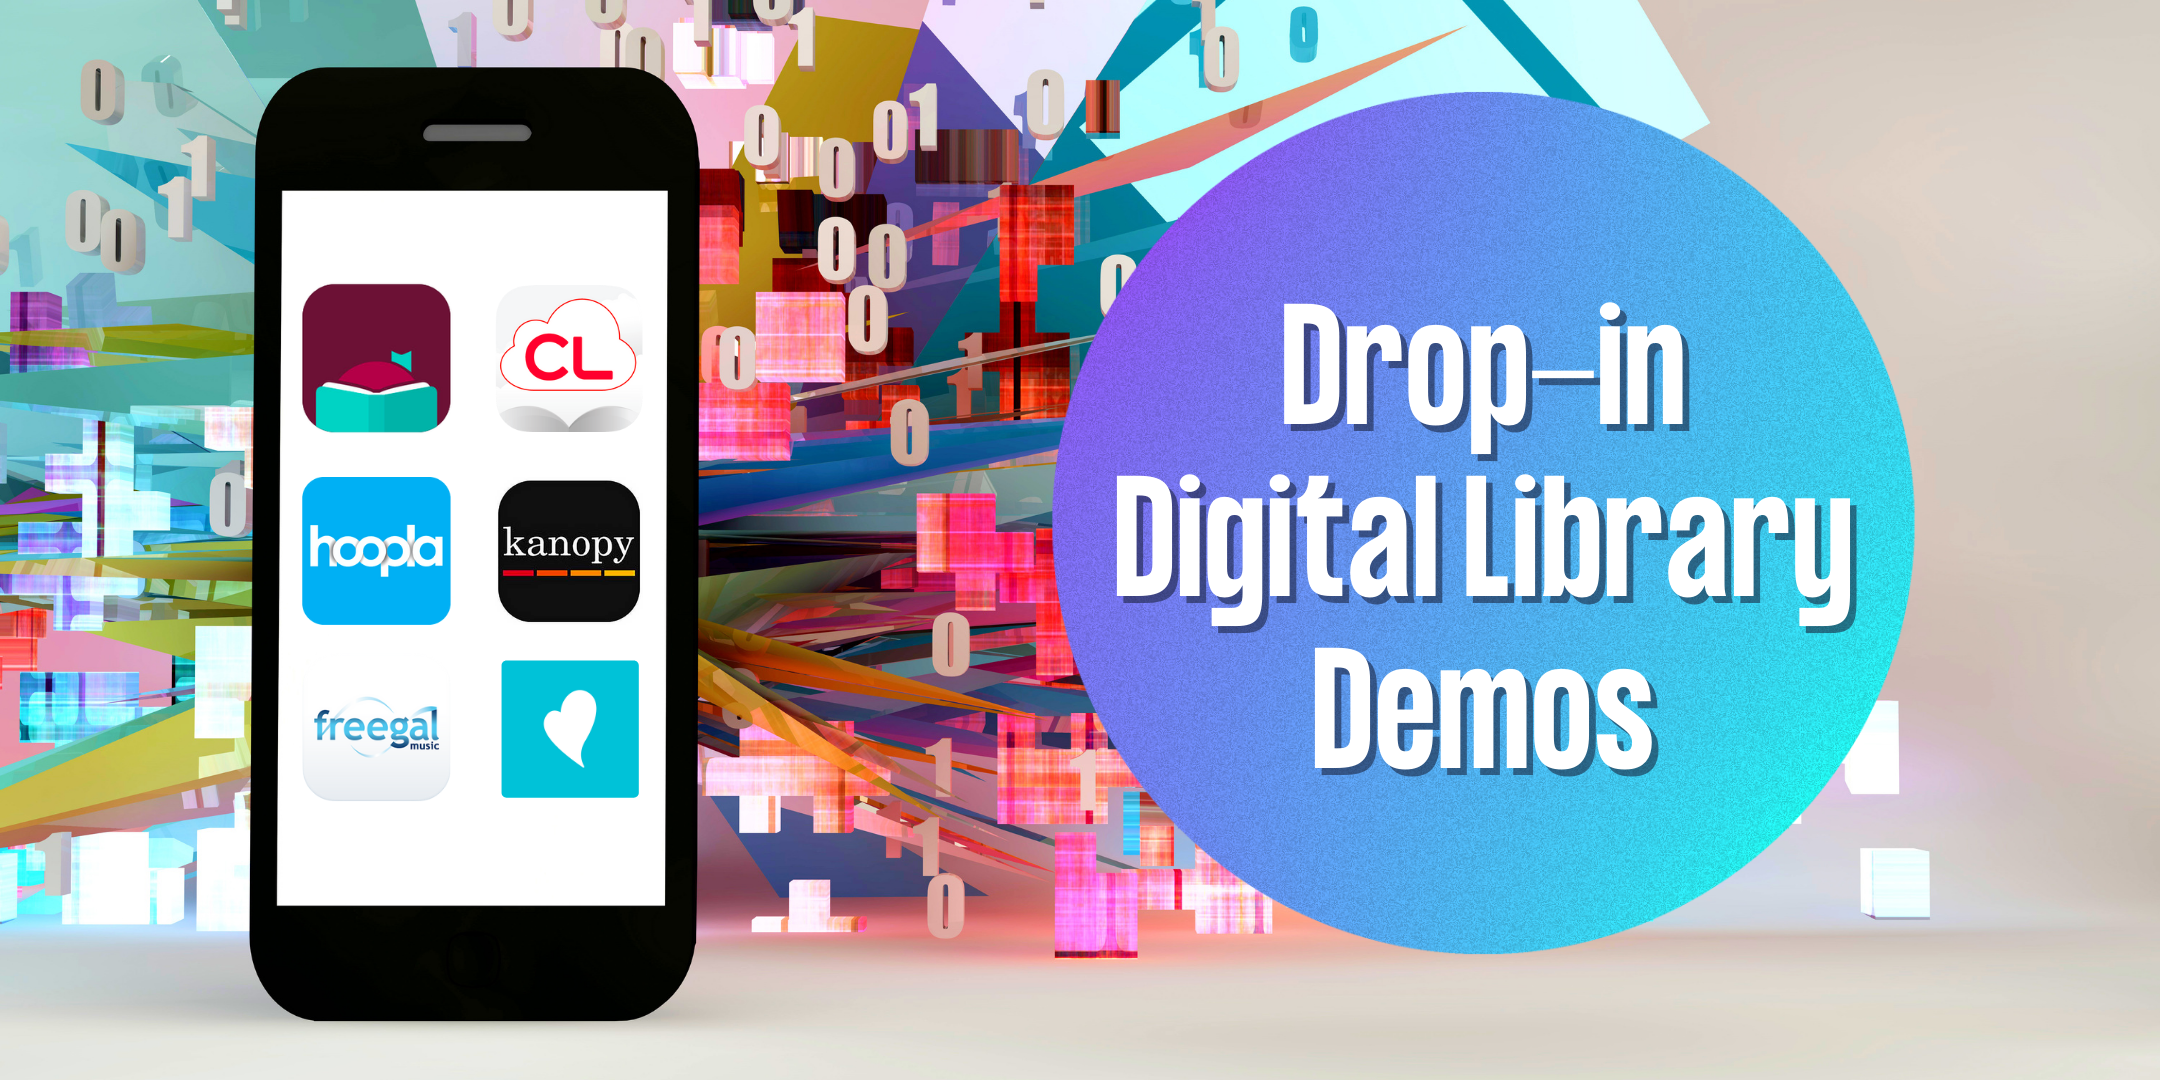 image of "Drop-in Digital Library Demos"